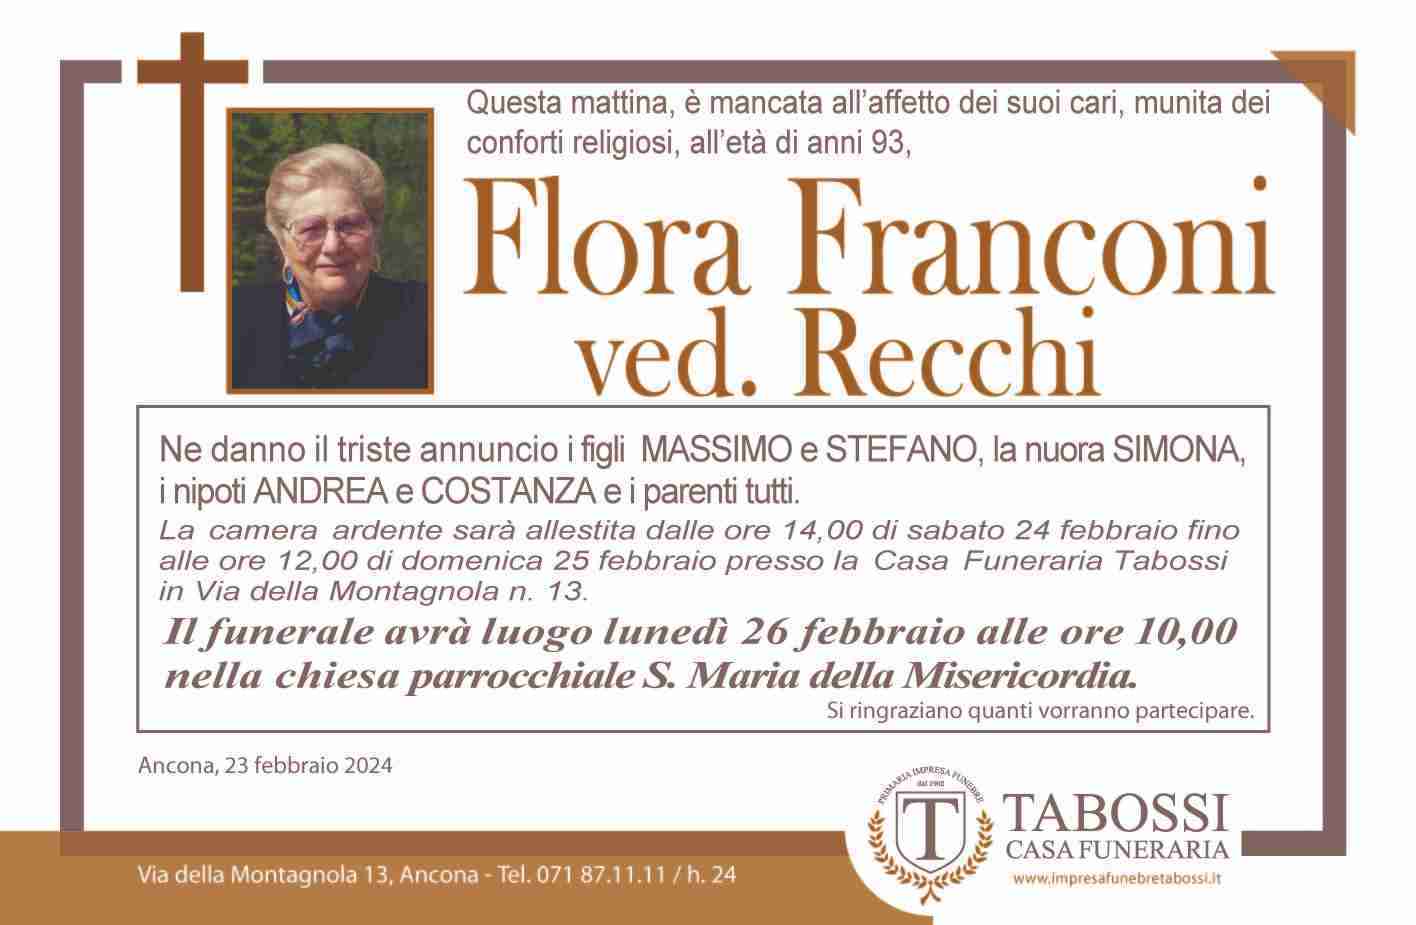 Flora Franconi